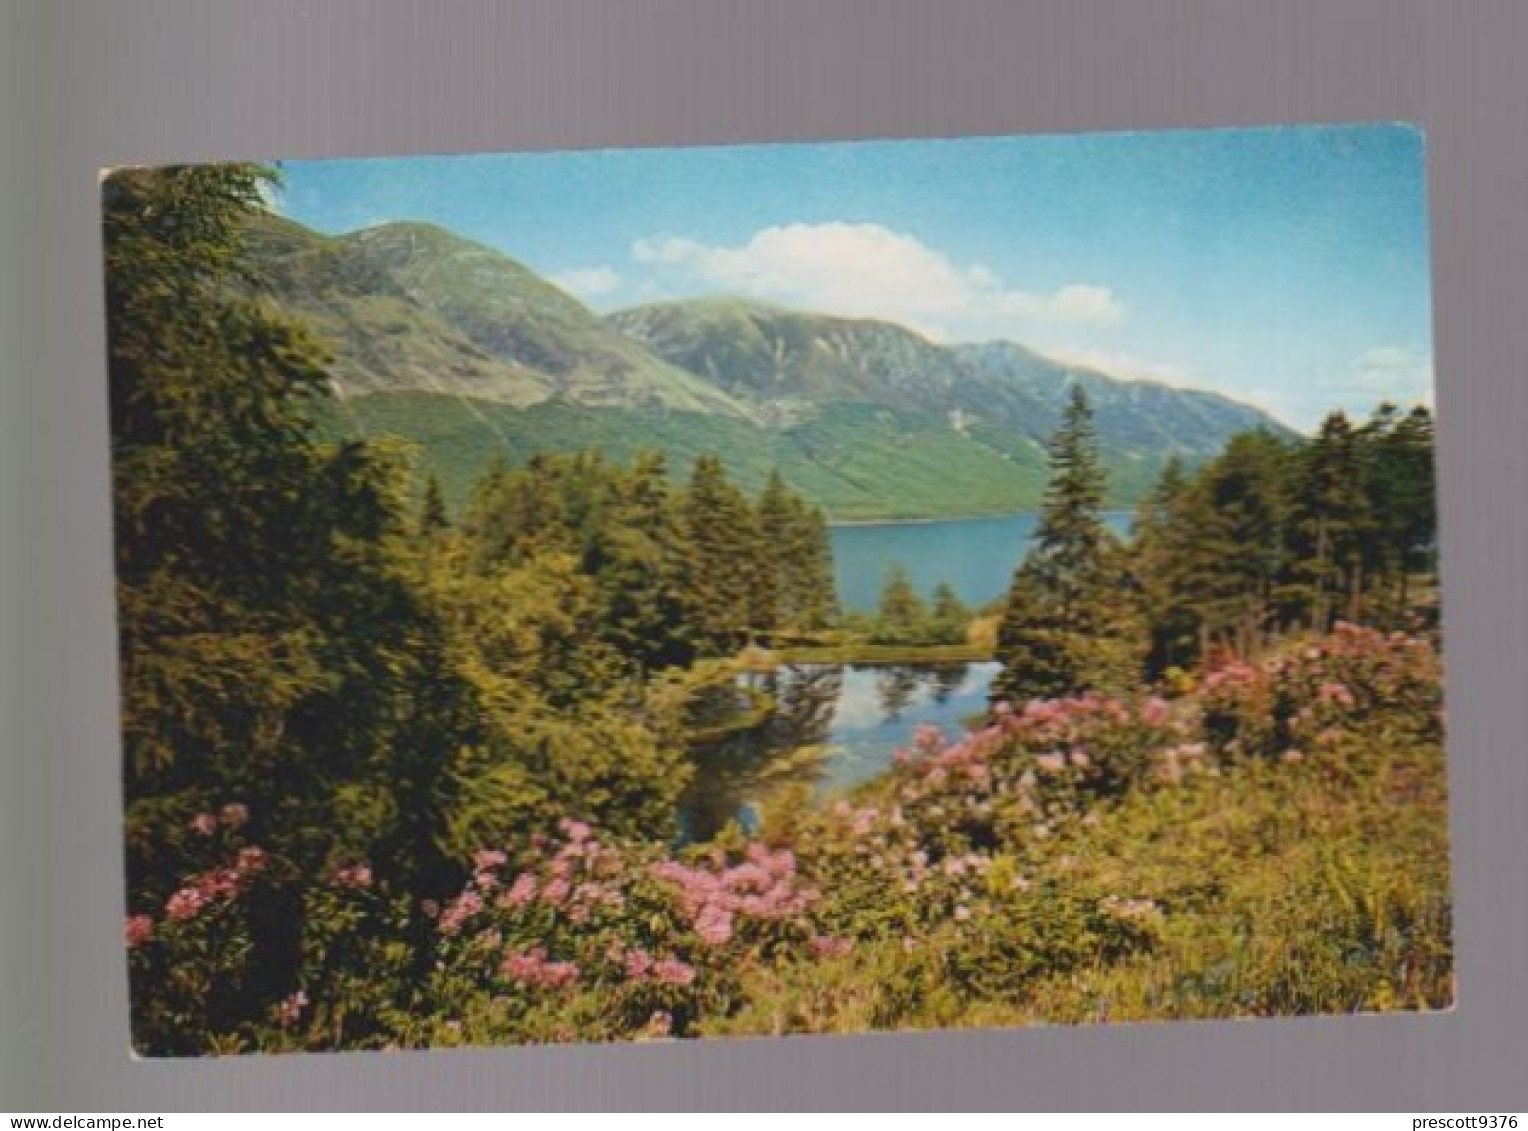 Loch Lochy, Inverness  UK   -   Unused Postcard   - UK14 - Arthur Dixon - Inverness-shire